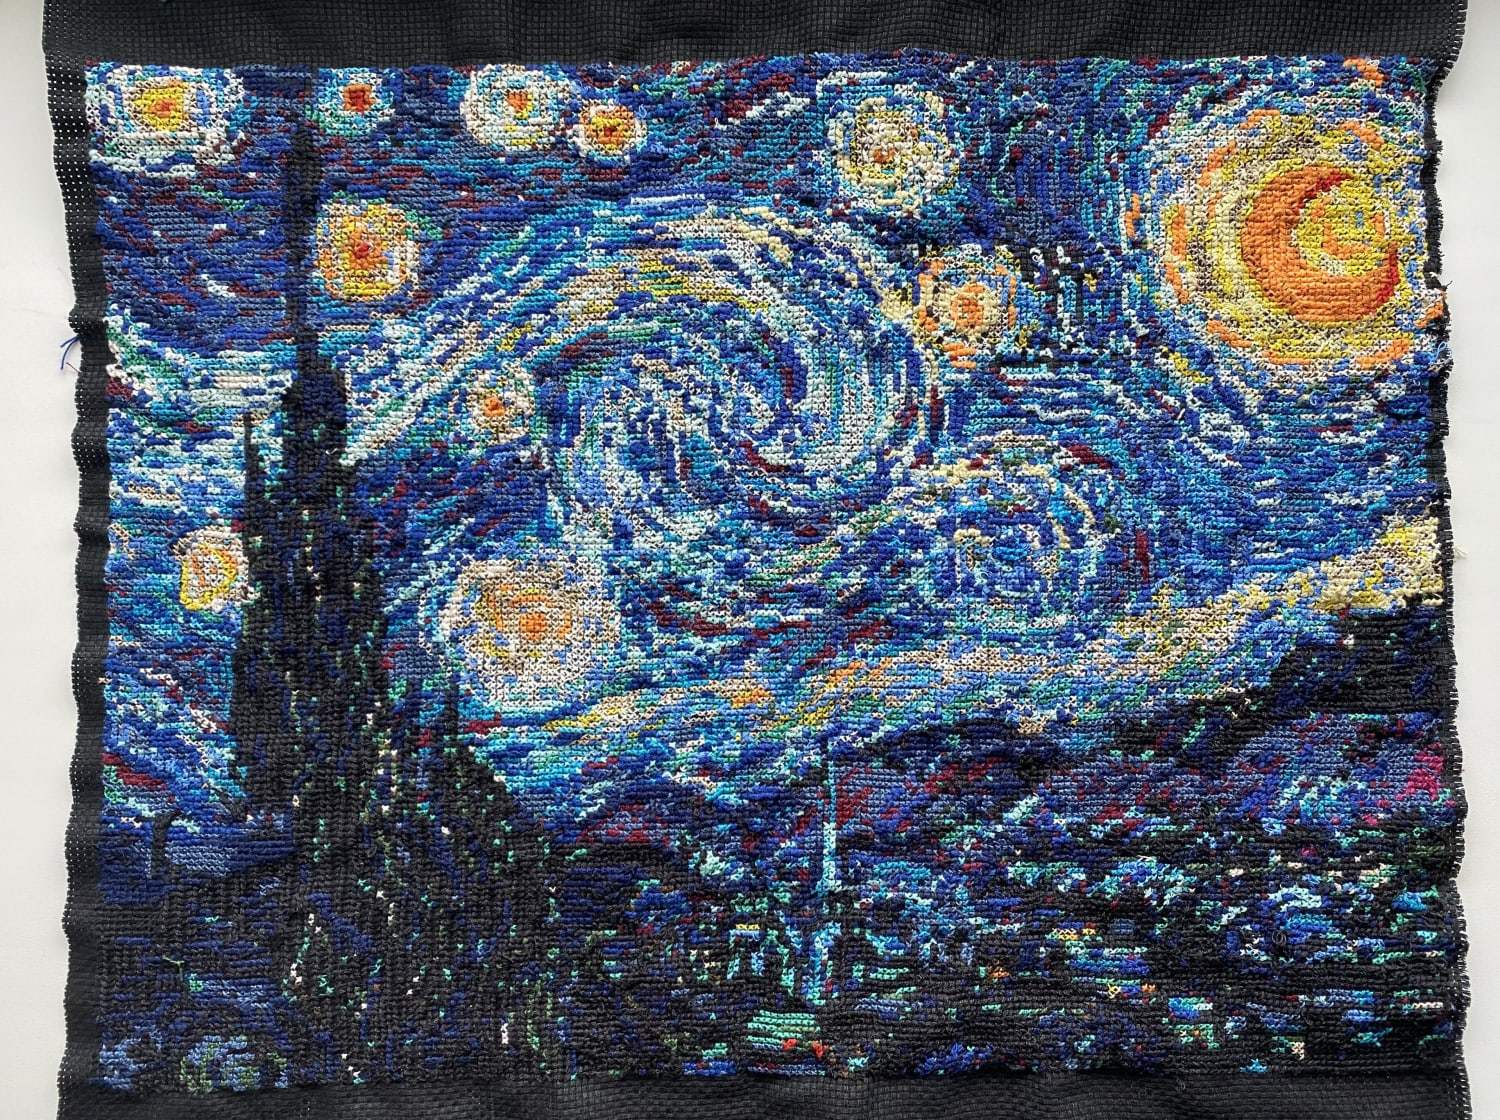 “Starry Night” by Van Gogh ✨